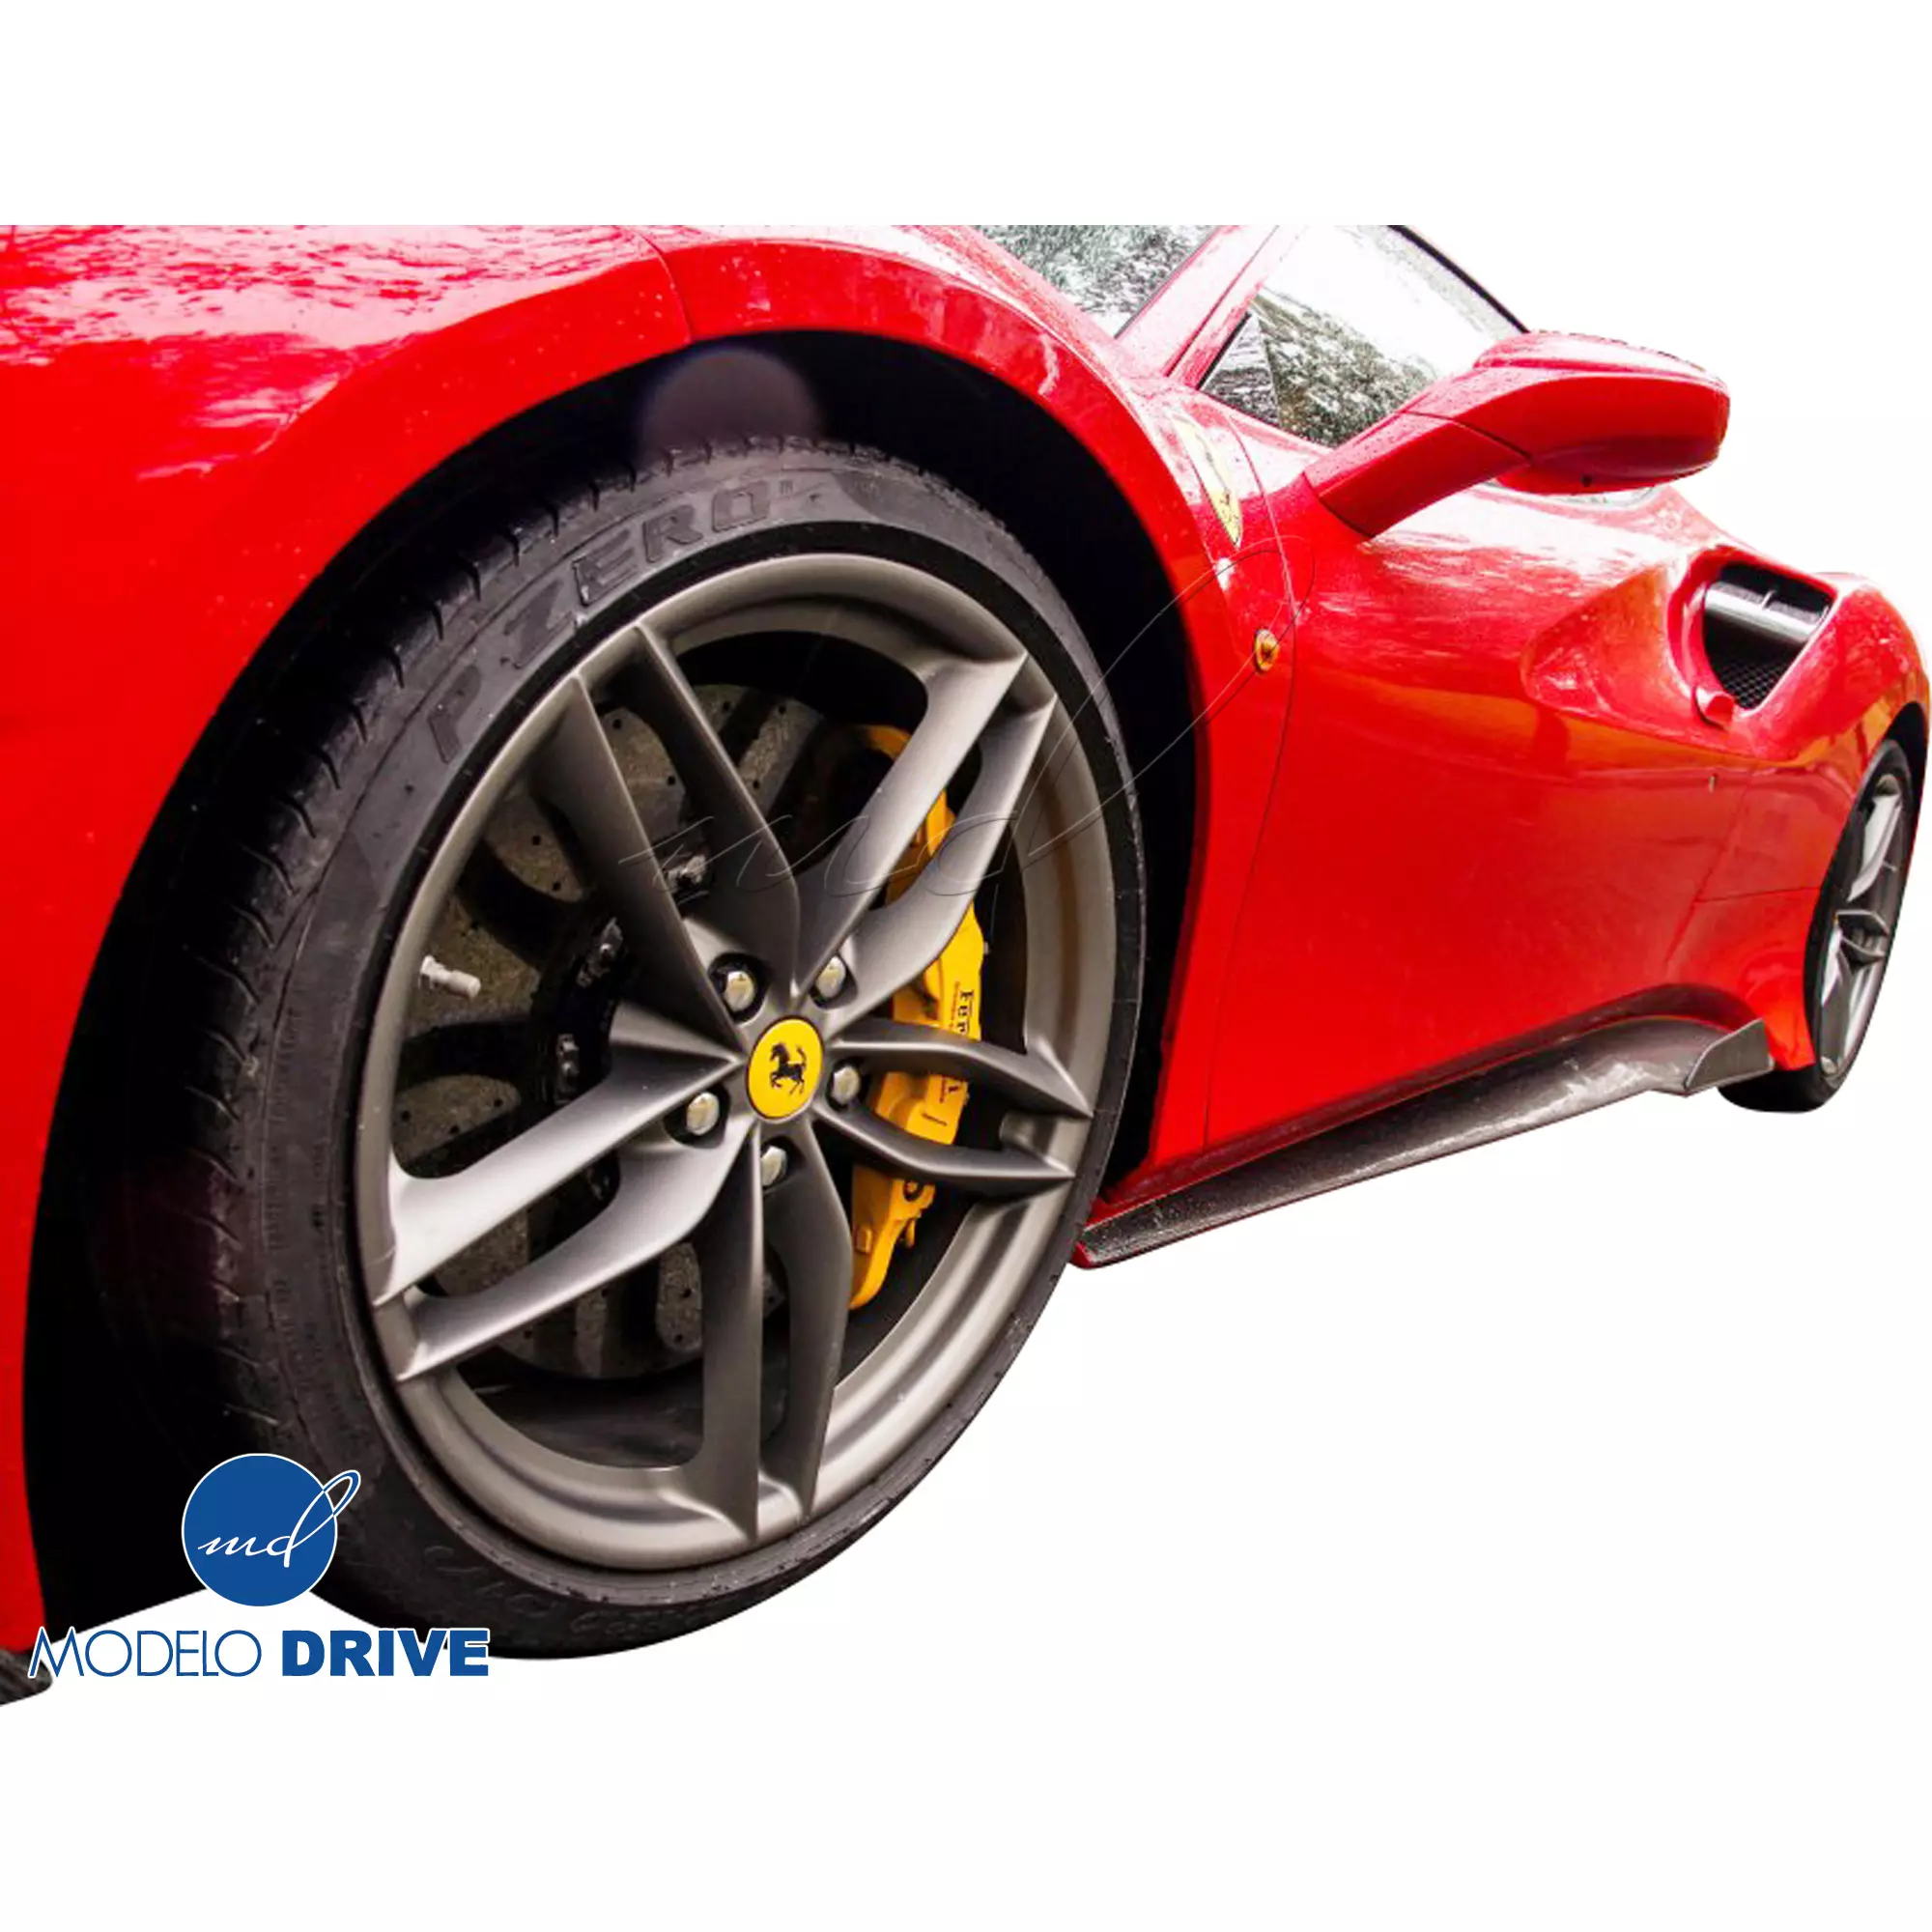 ModeloDrive Partial Carbon Fiber MDES Body Kit > Ferrari 488 GTB F142M 2016-2019 - Image 31